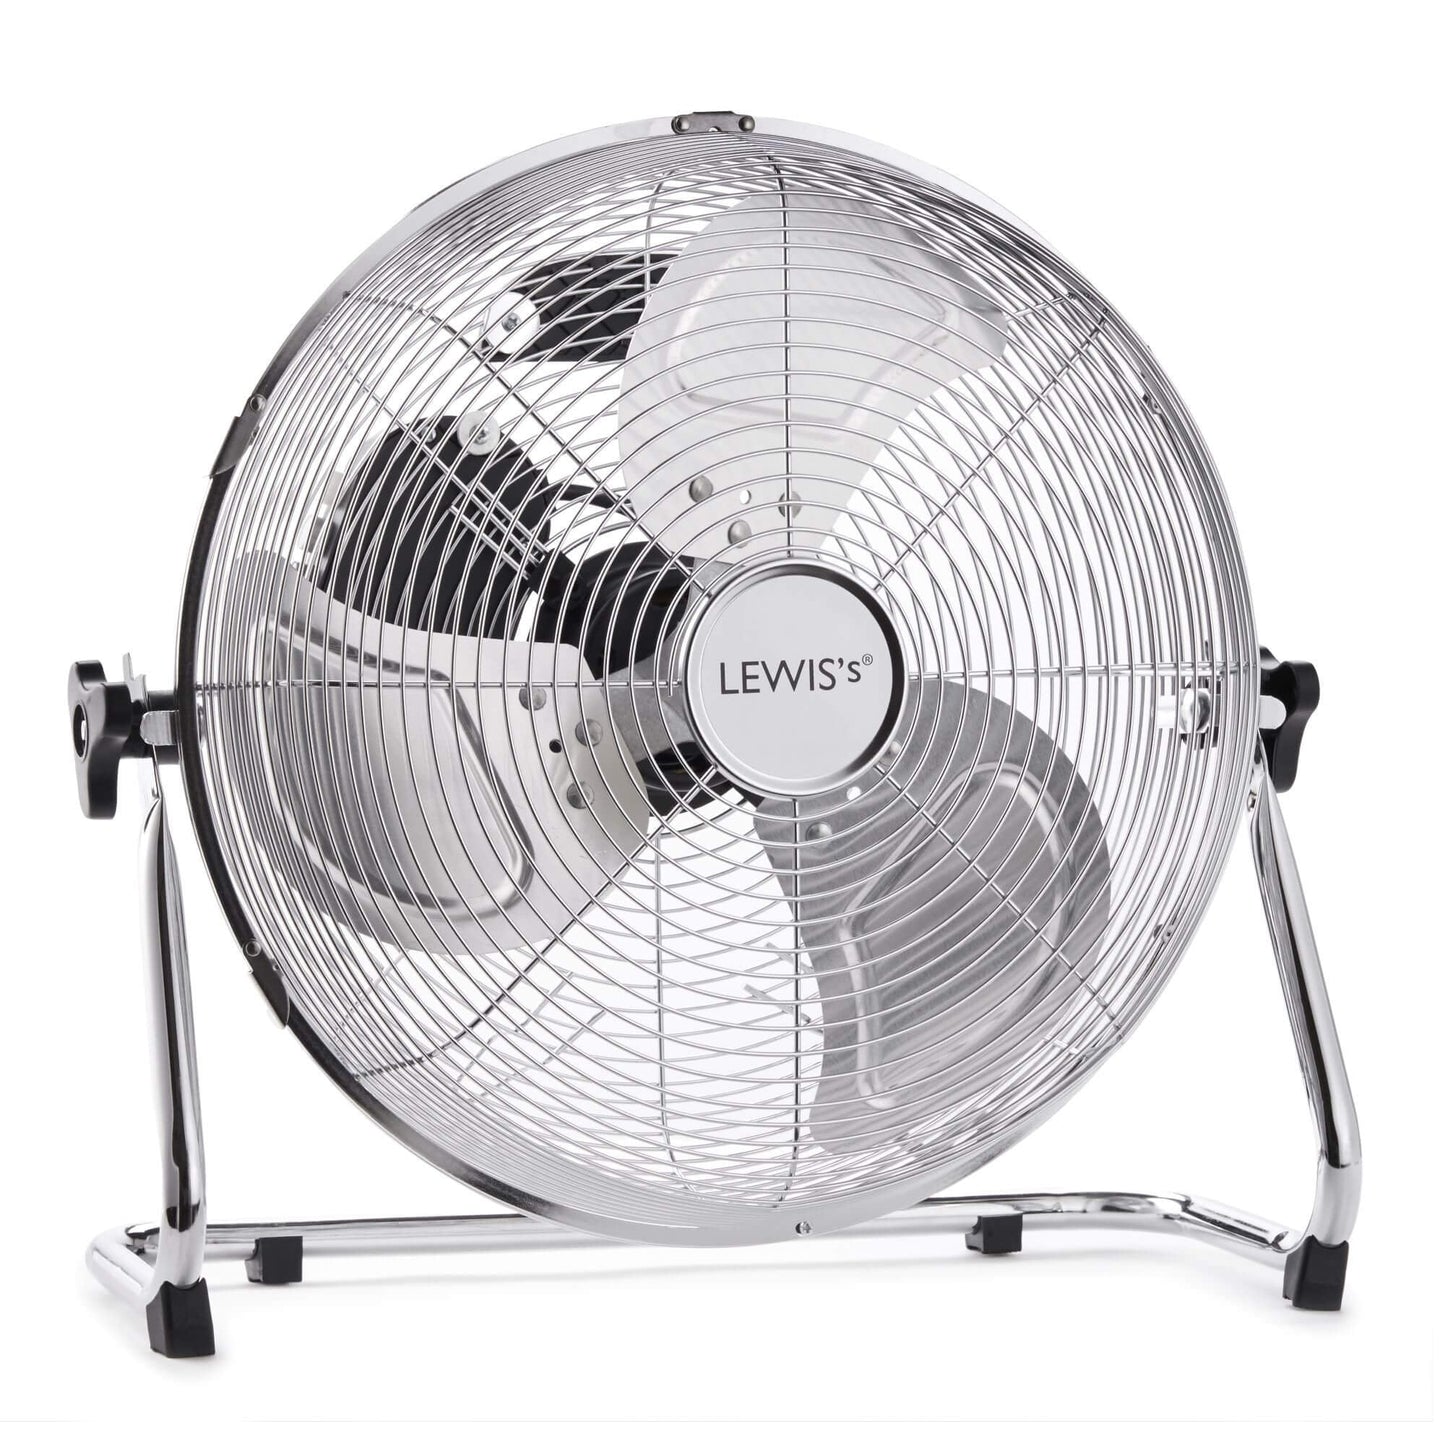 Lewis's 14 Inch Velocity Floor Fan - Chrome